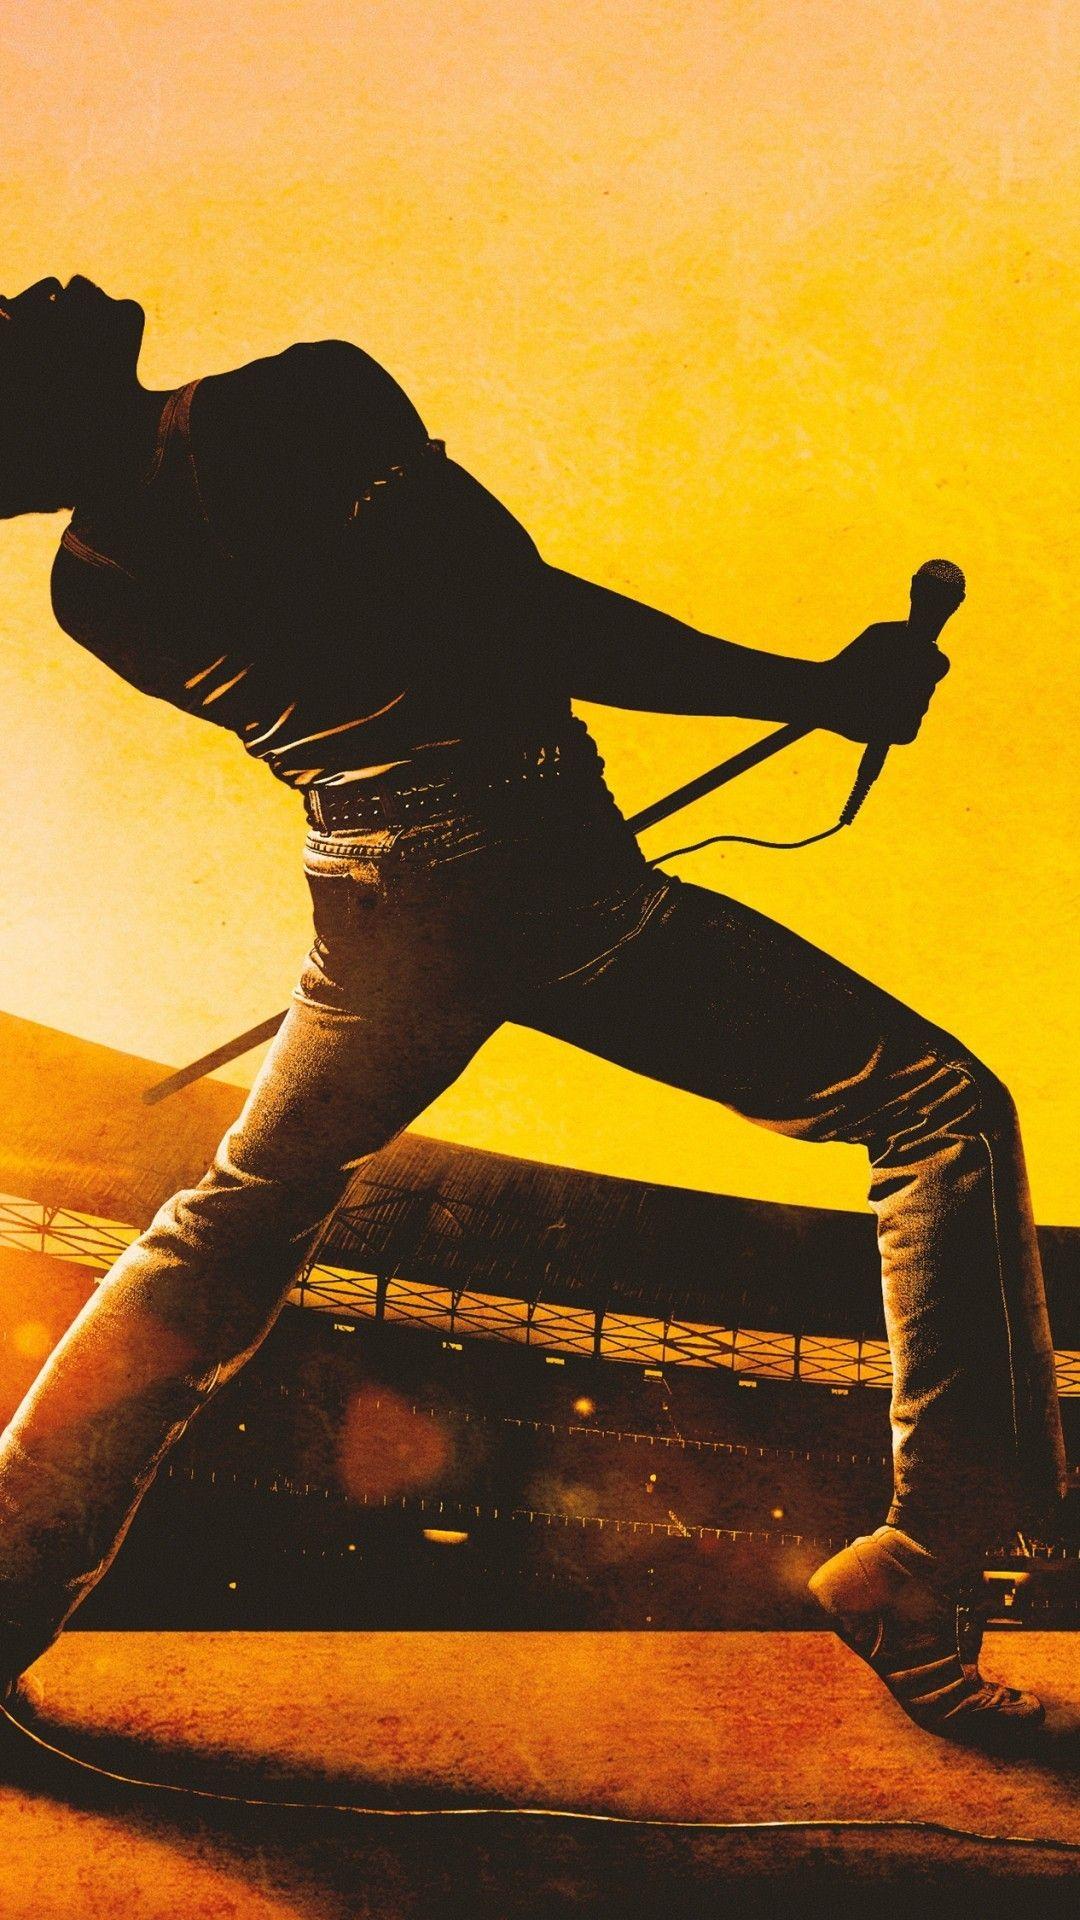 Bohemian Rhapsody download the new for mac